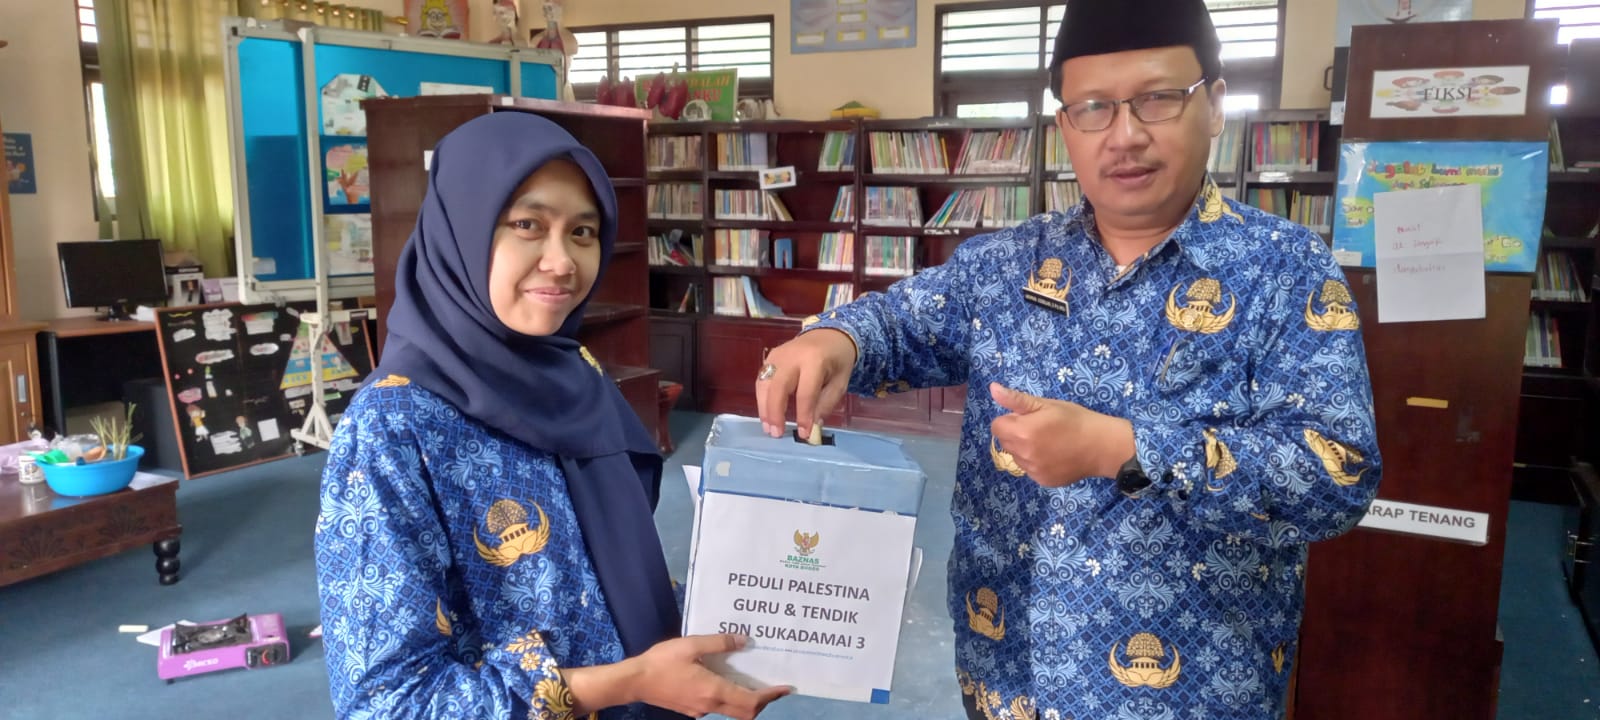 SDN Sukadamai 3 Kota Bogor melakukan penggalangan donasi untuk Palestina.